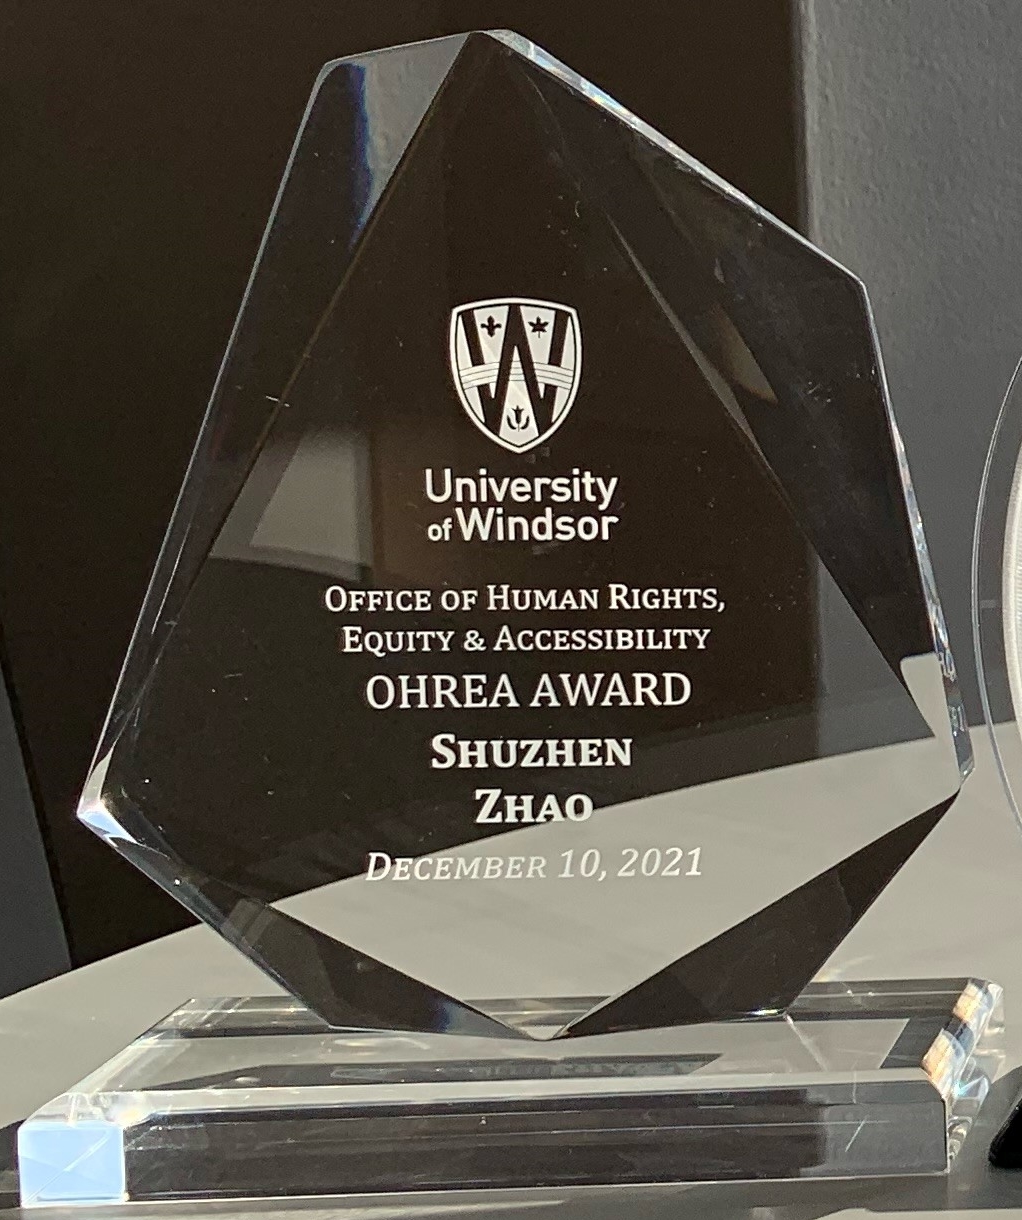 clear acrylic trophy presented to Shuzhen Zhao, OHREA Award